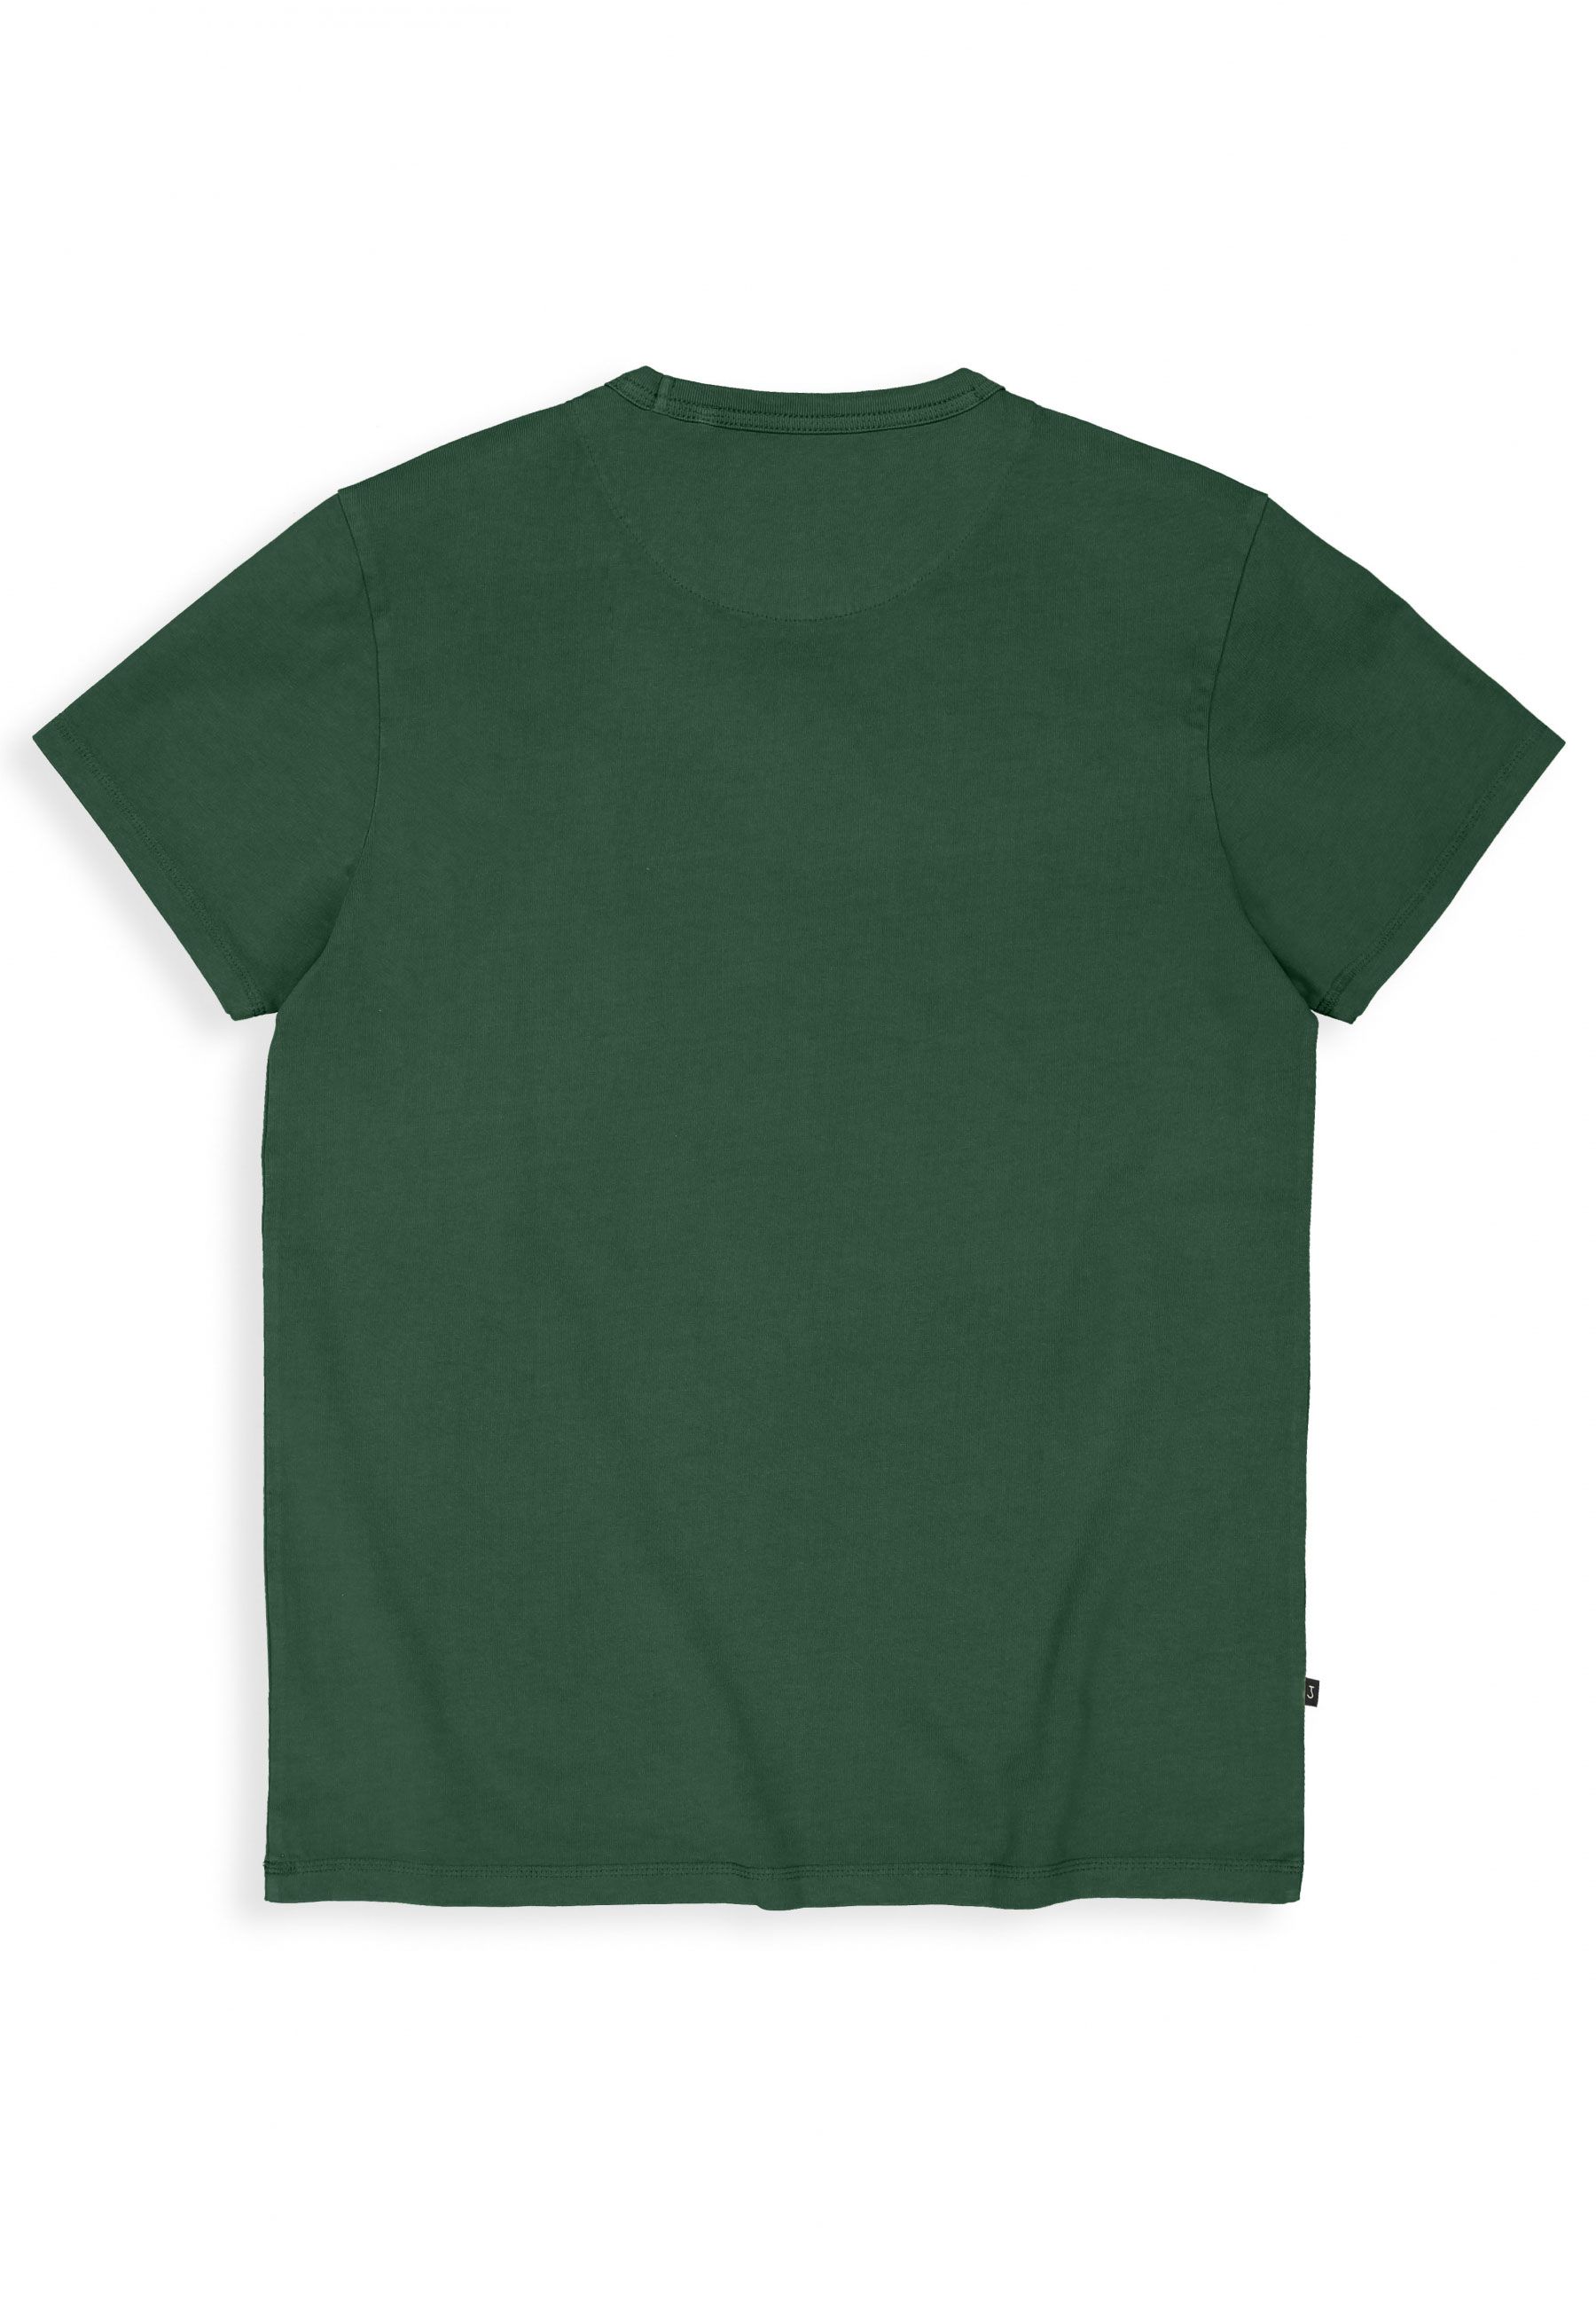 Army t-shirts groen